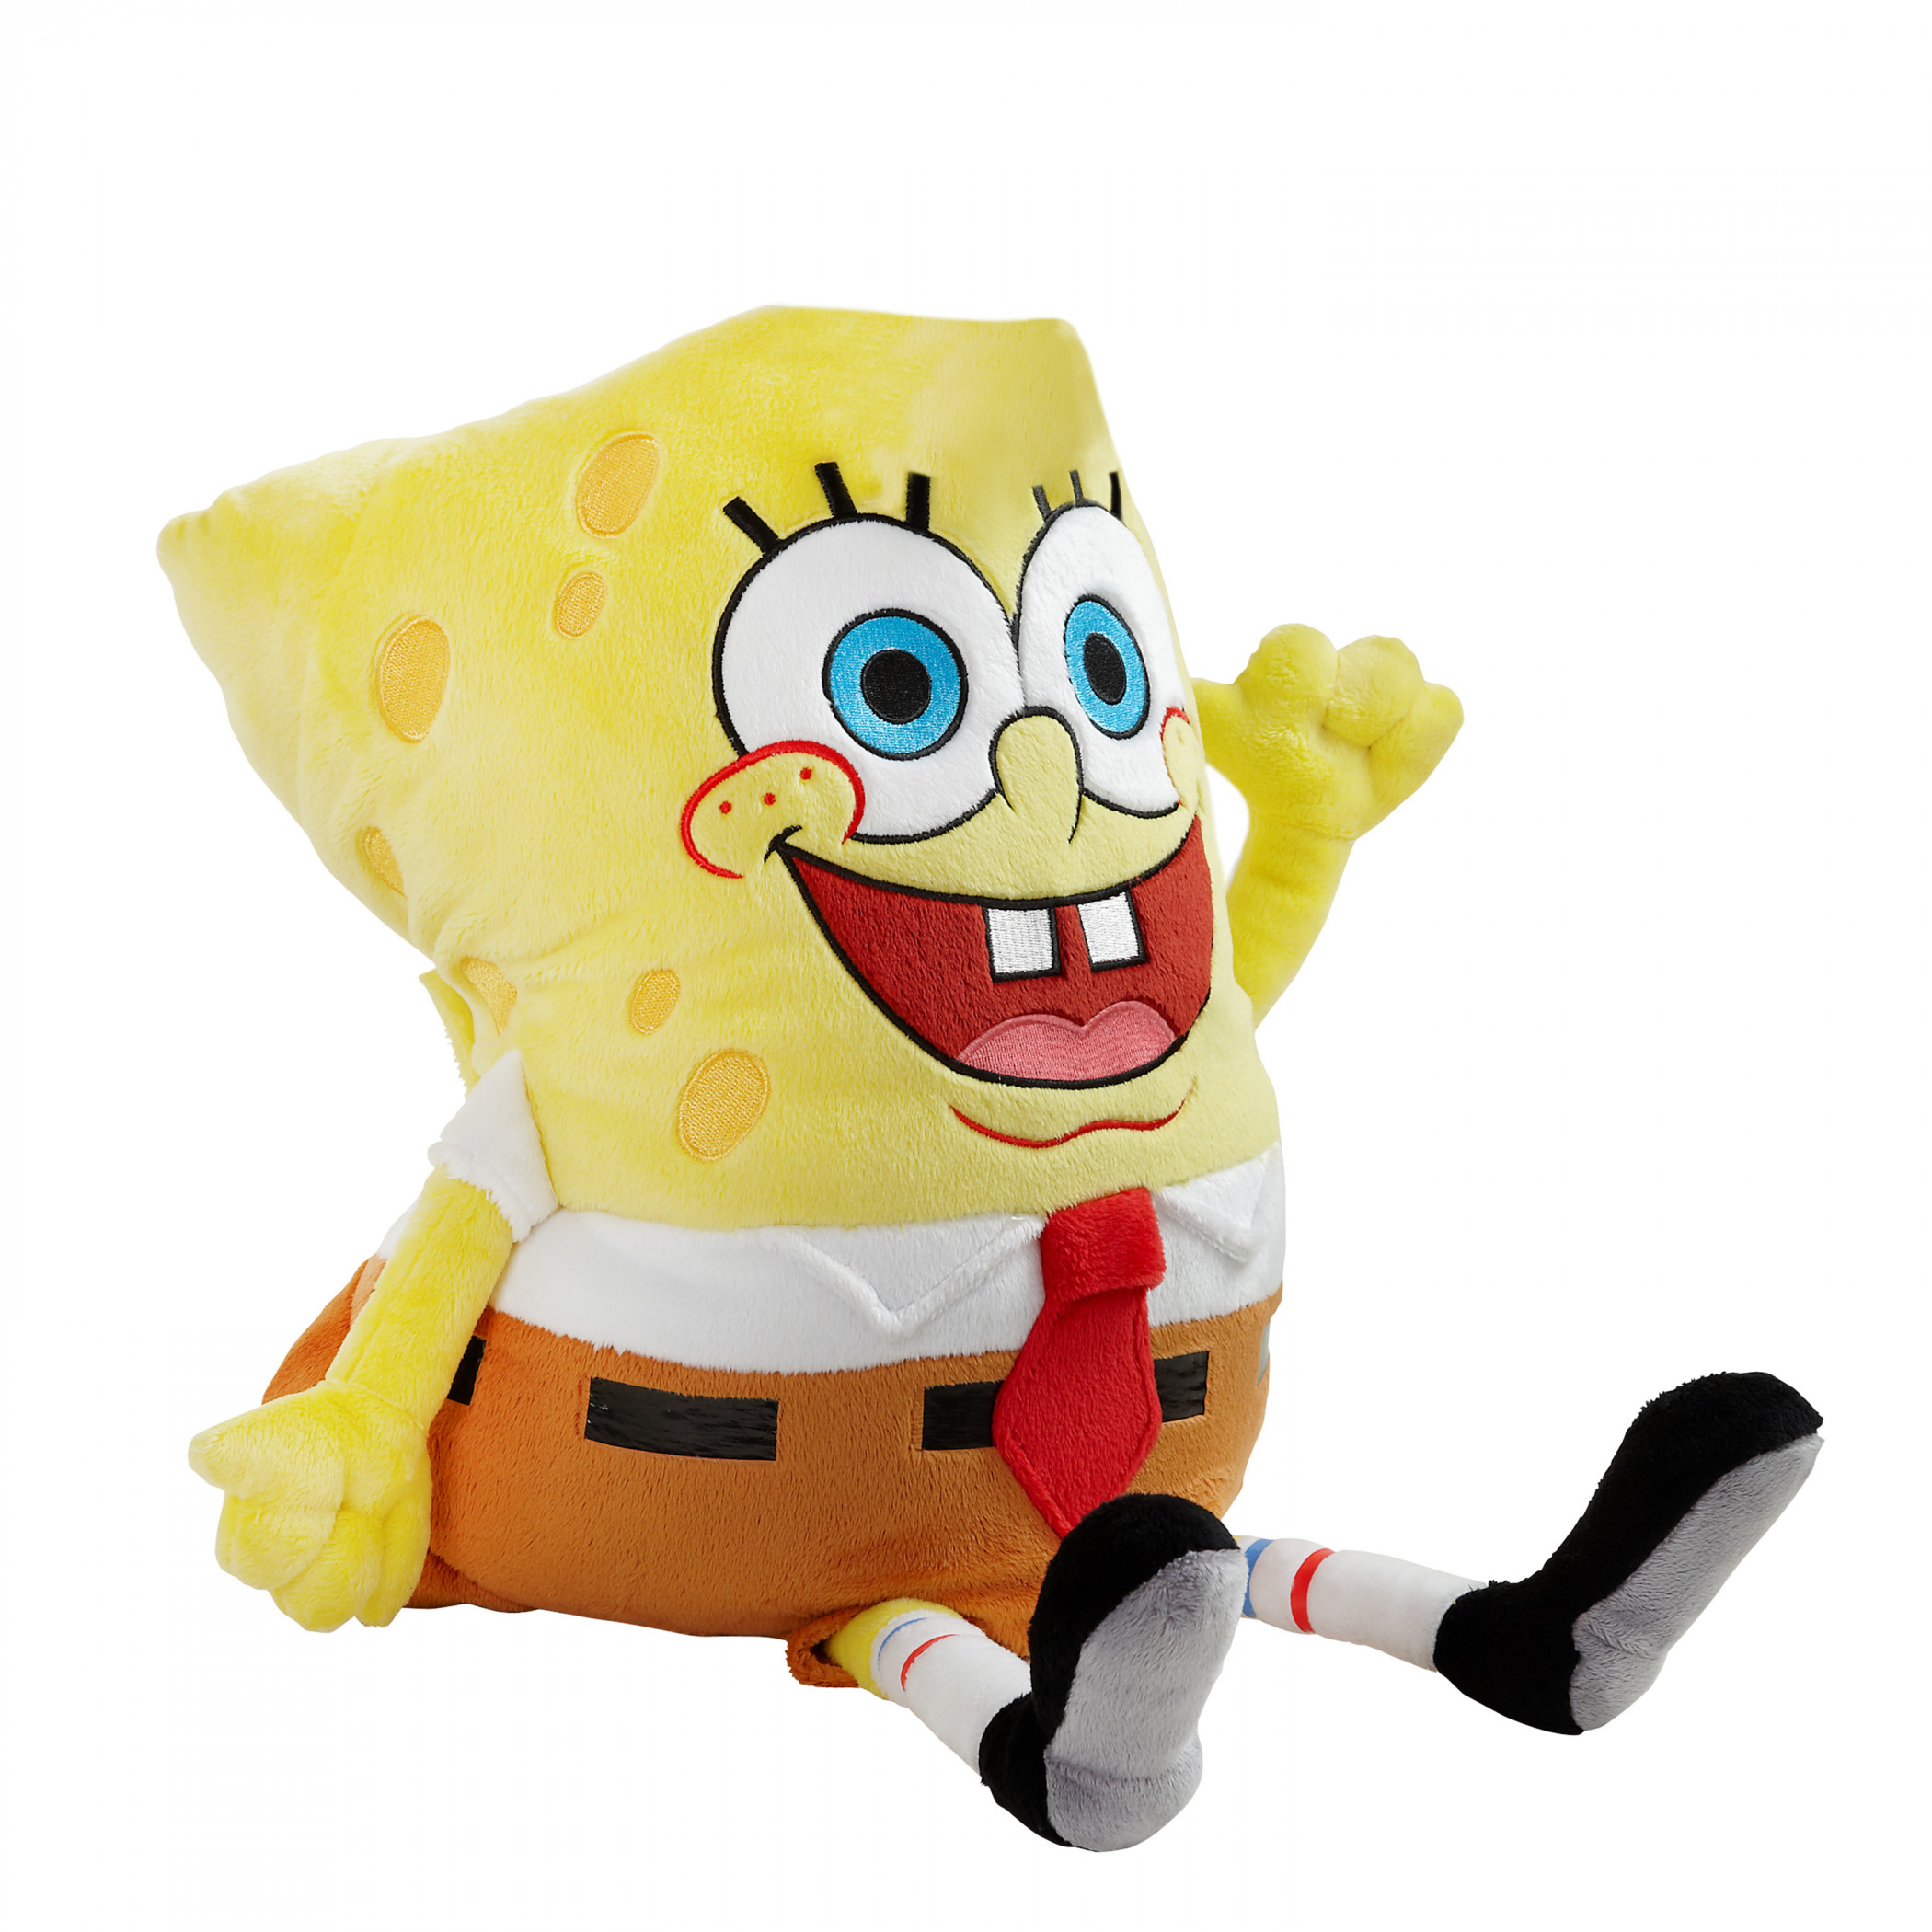 SpongeBob SquarePants Pillow Pet Stuffed Plush Toy